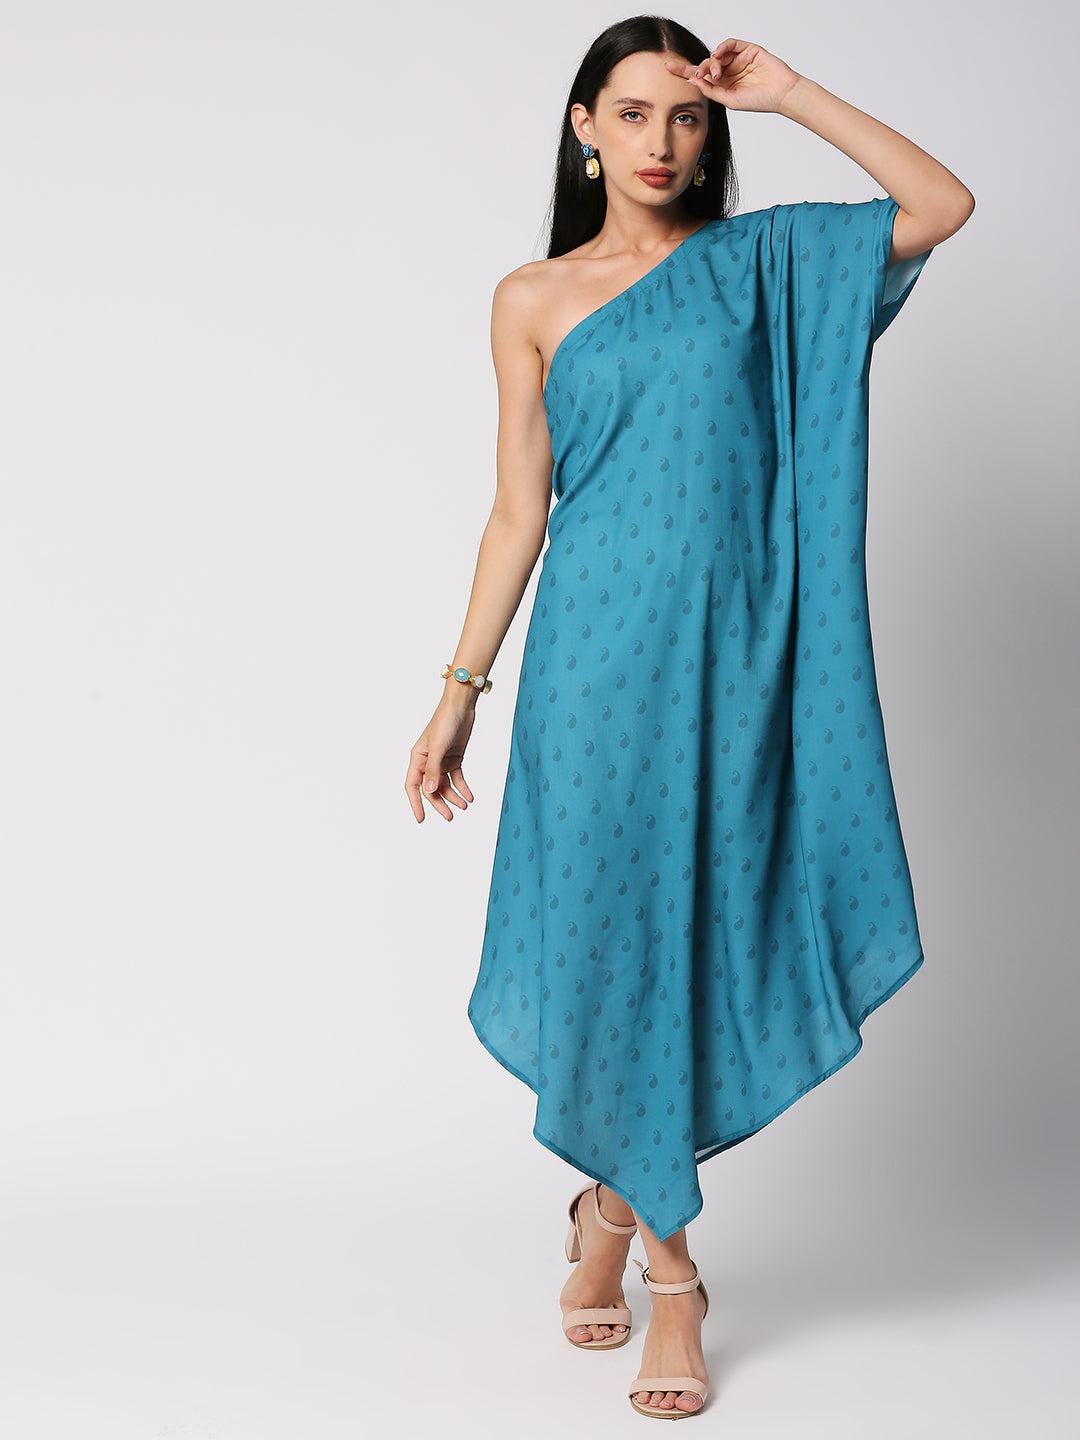 cleopatra-one-shoulder-assymetrical-dress---blue